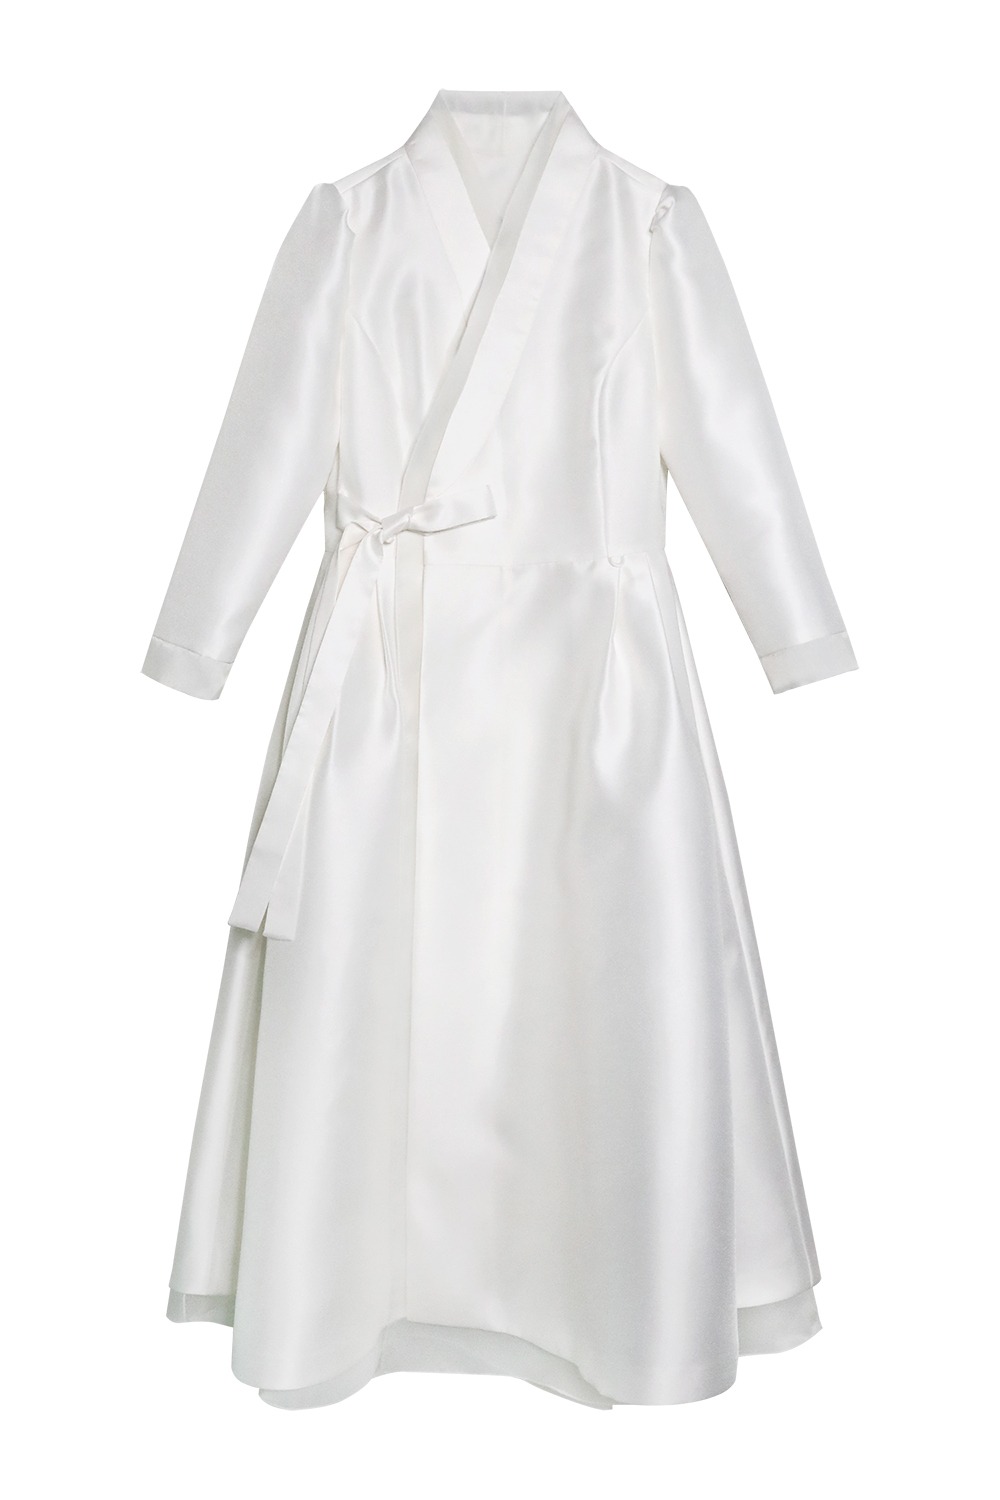 Mi Ka Do Graceful Chulick Dress [White Ivory]